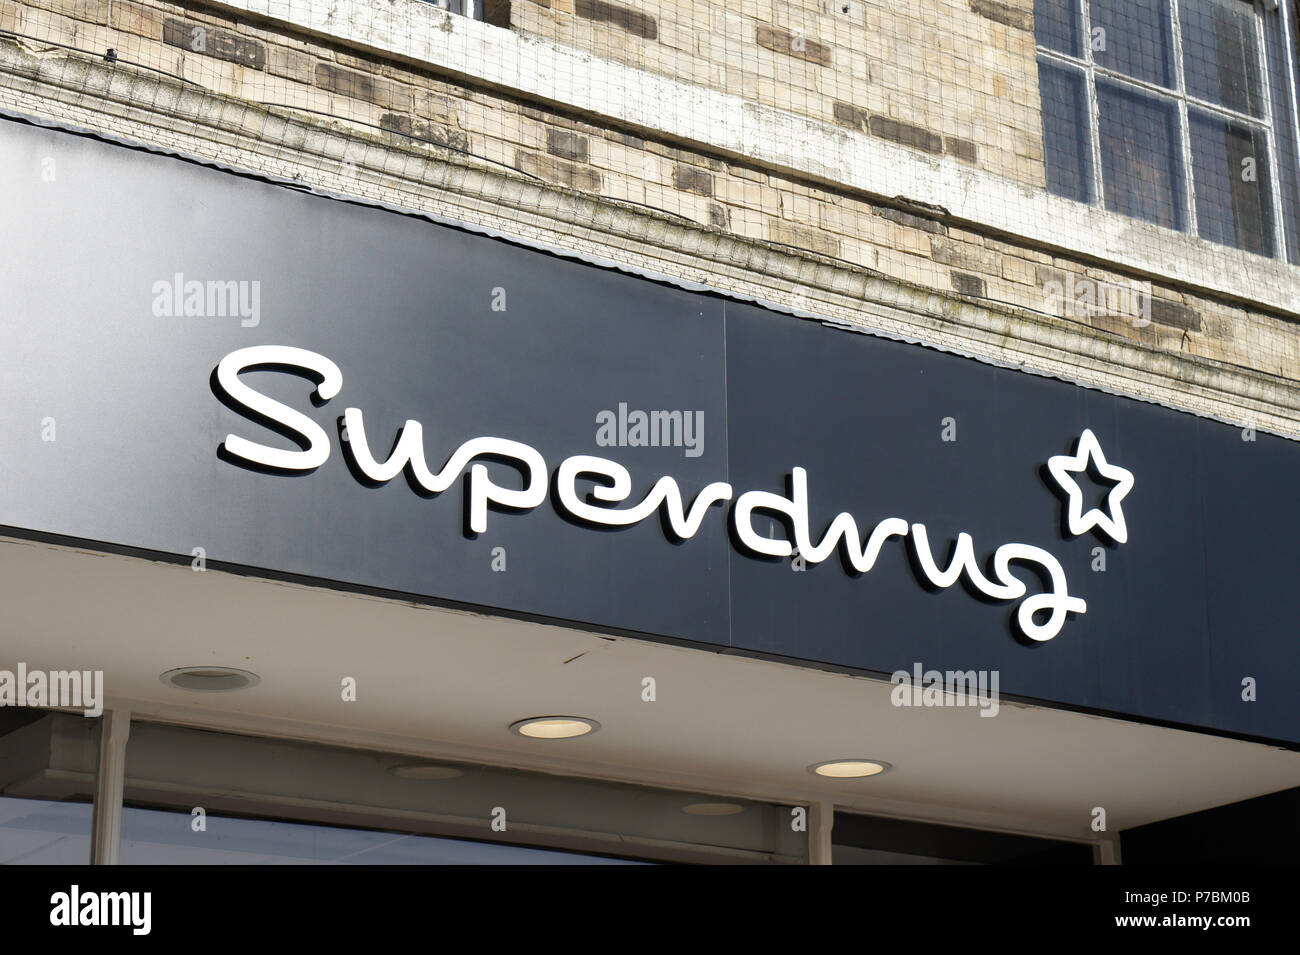 Bury St Edmunds, UK - February 16 2018:  The exterior of a Superdrug store in Bury St Edmunds Stock Photo